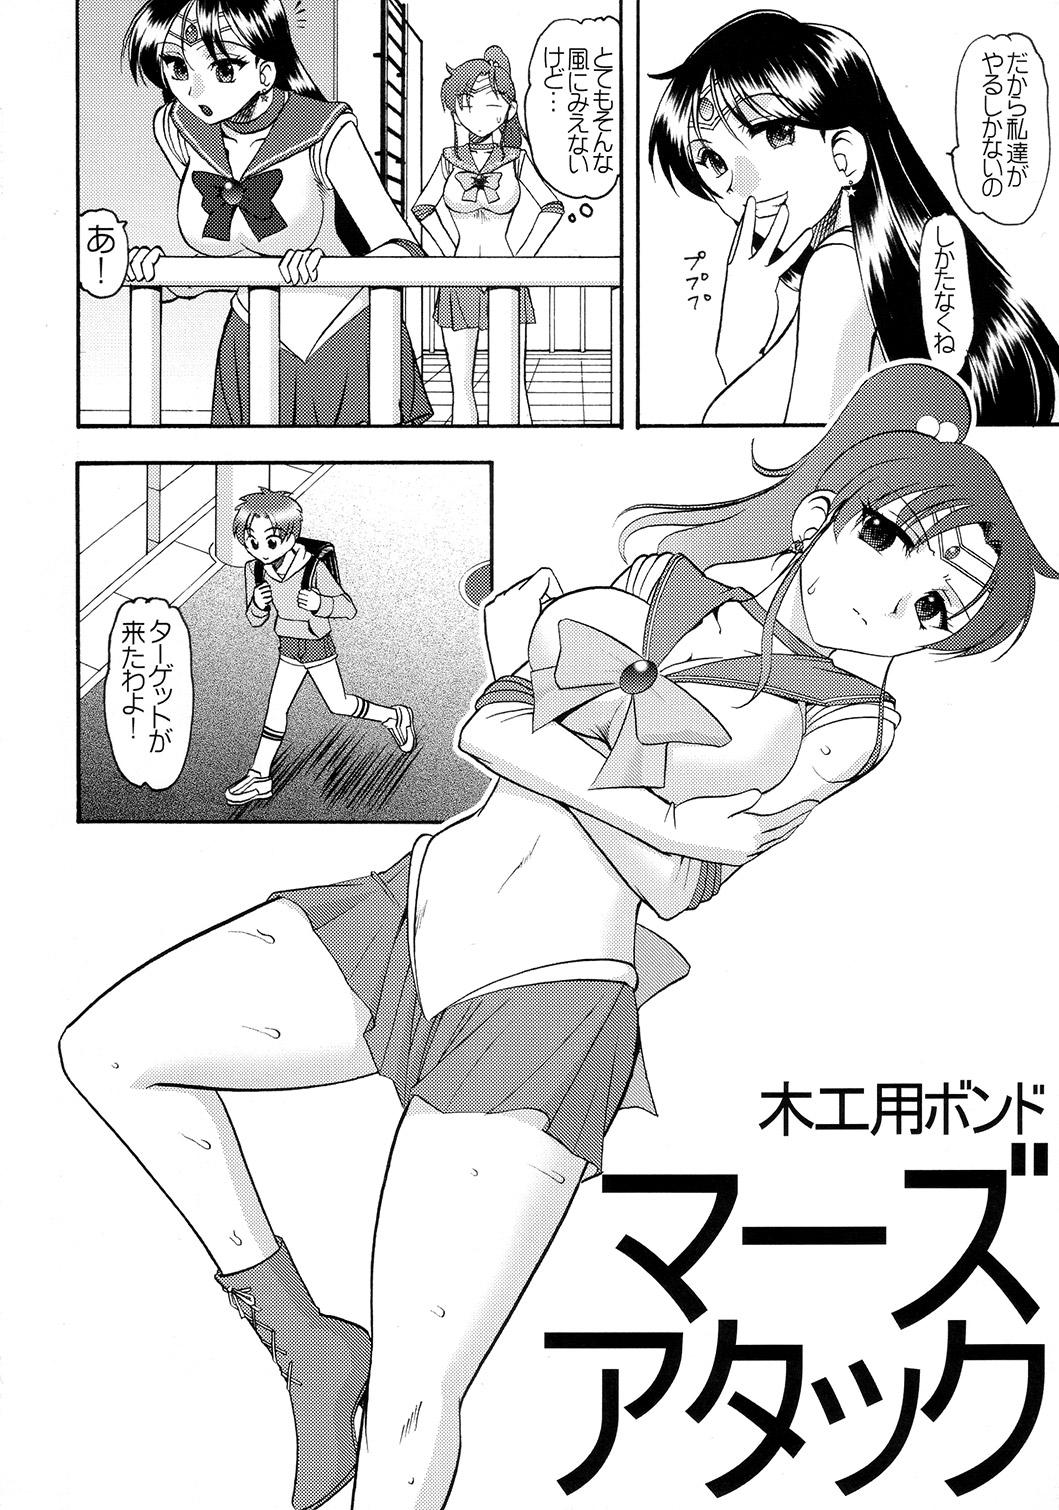 Babes SEMEDAIN G WORKS vol.33 - Wakusei Chokuretsu - Sailor moon Cogida - Page 5